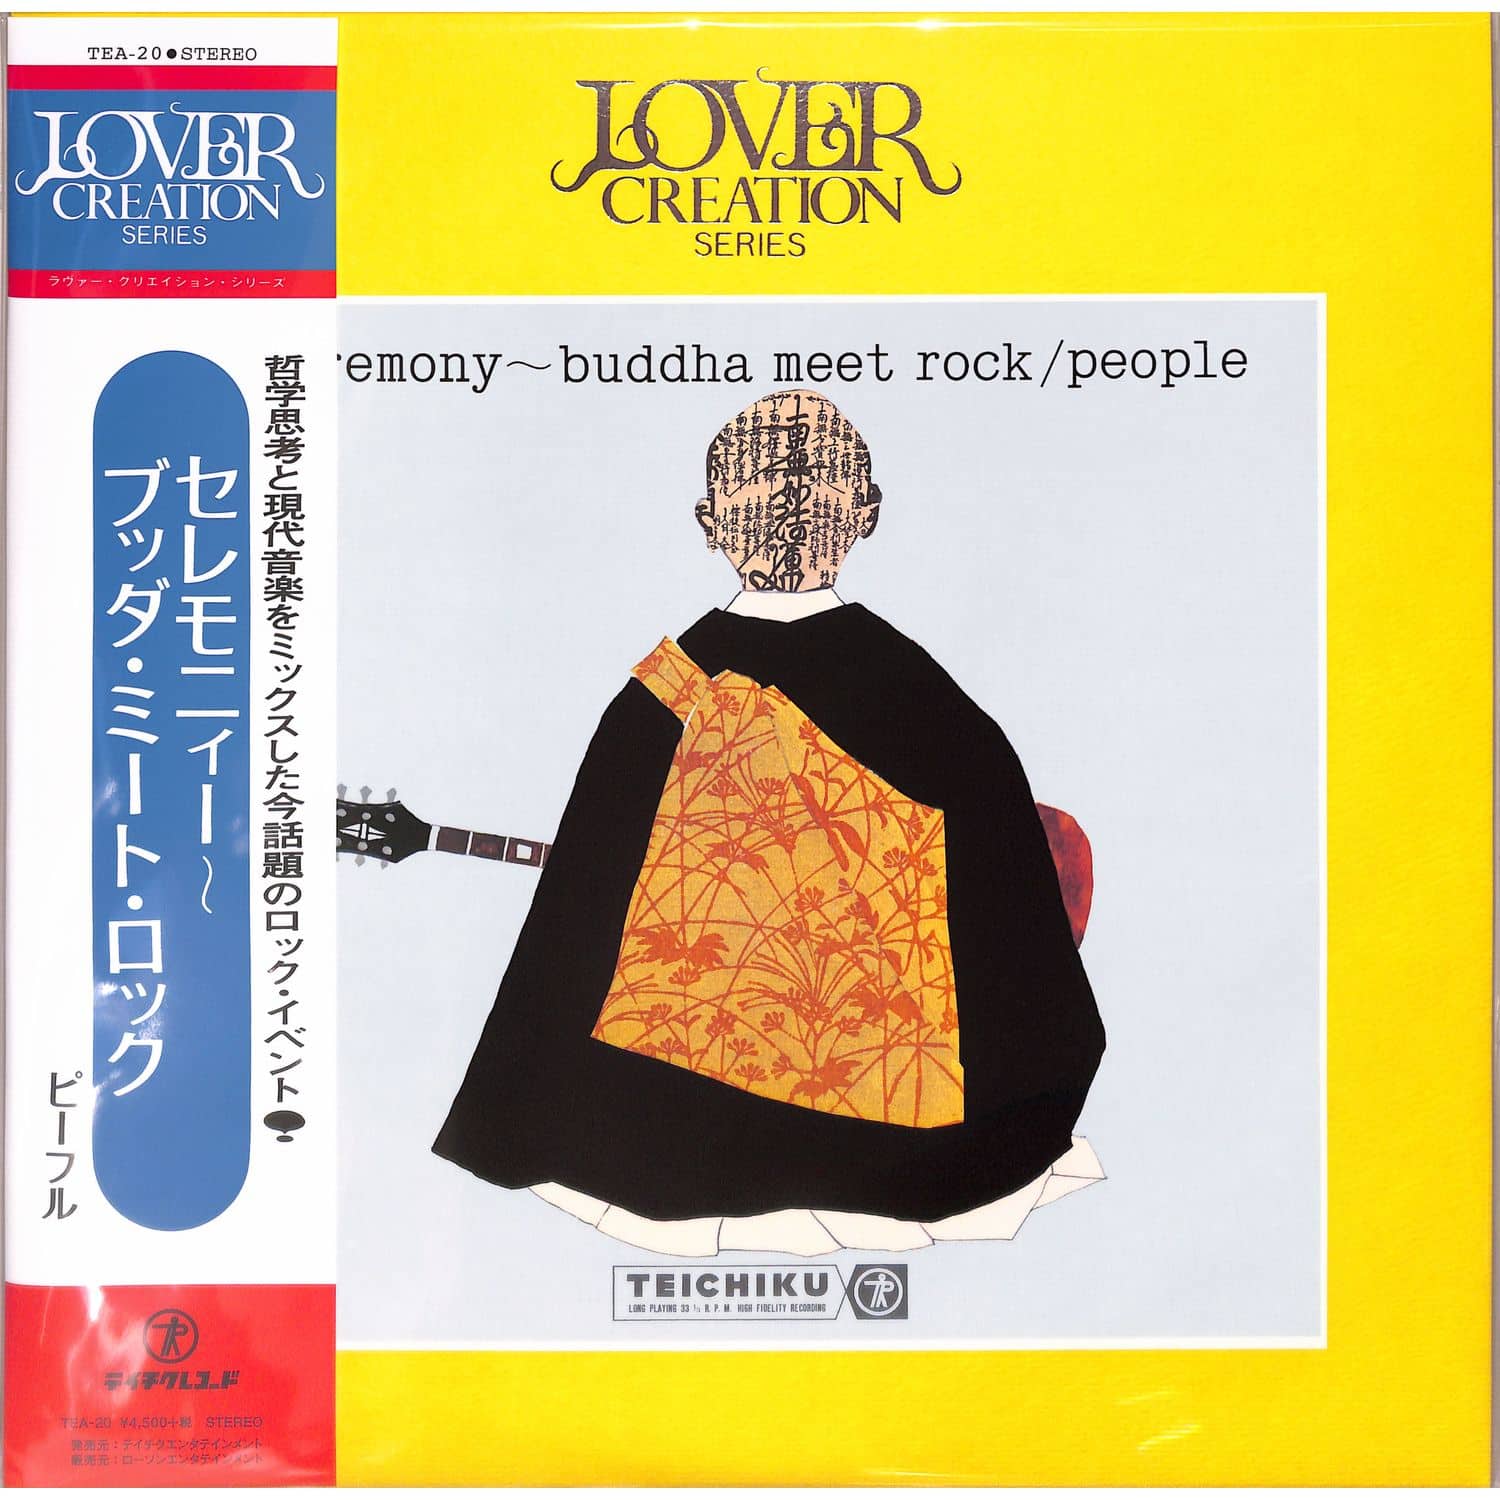 People - CEREMONY BUDDHA MEET ROCK 